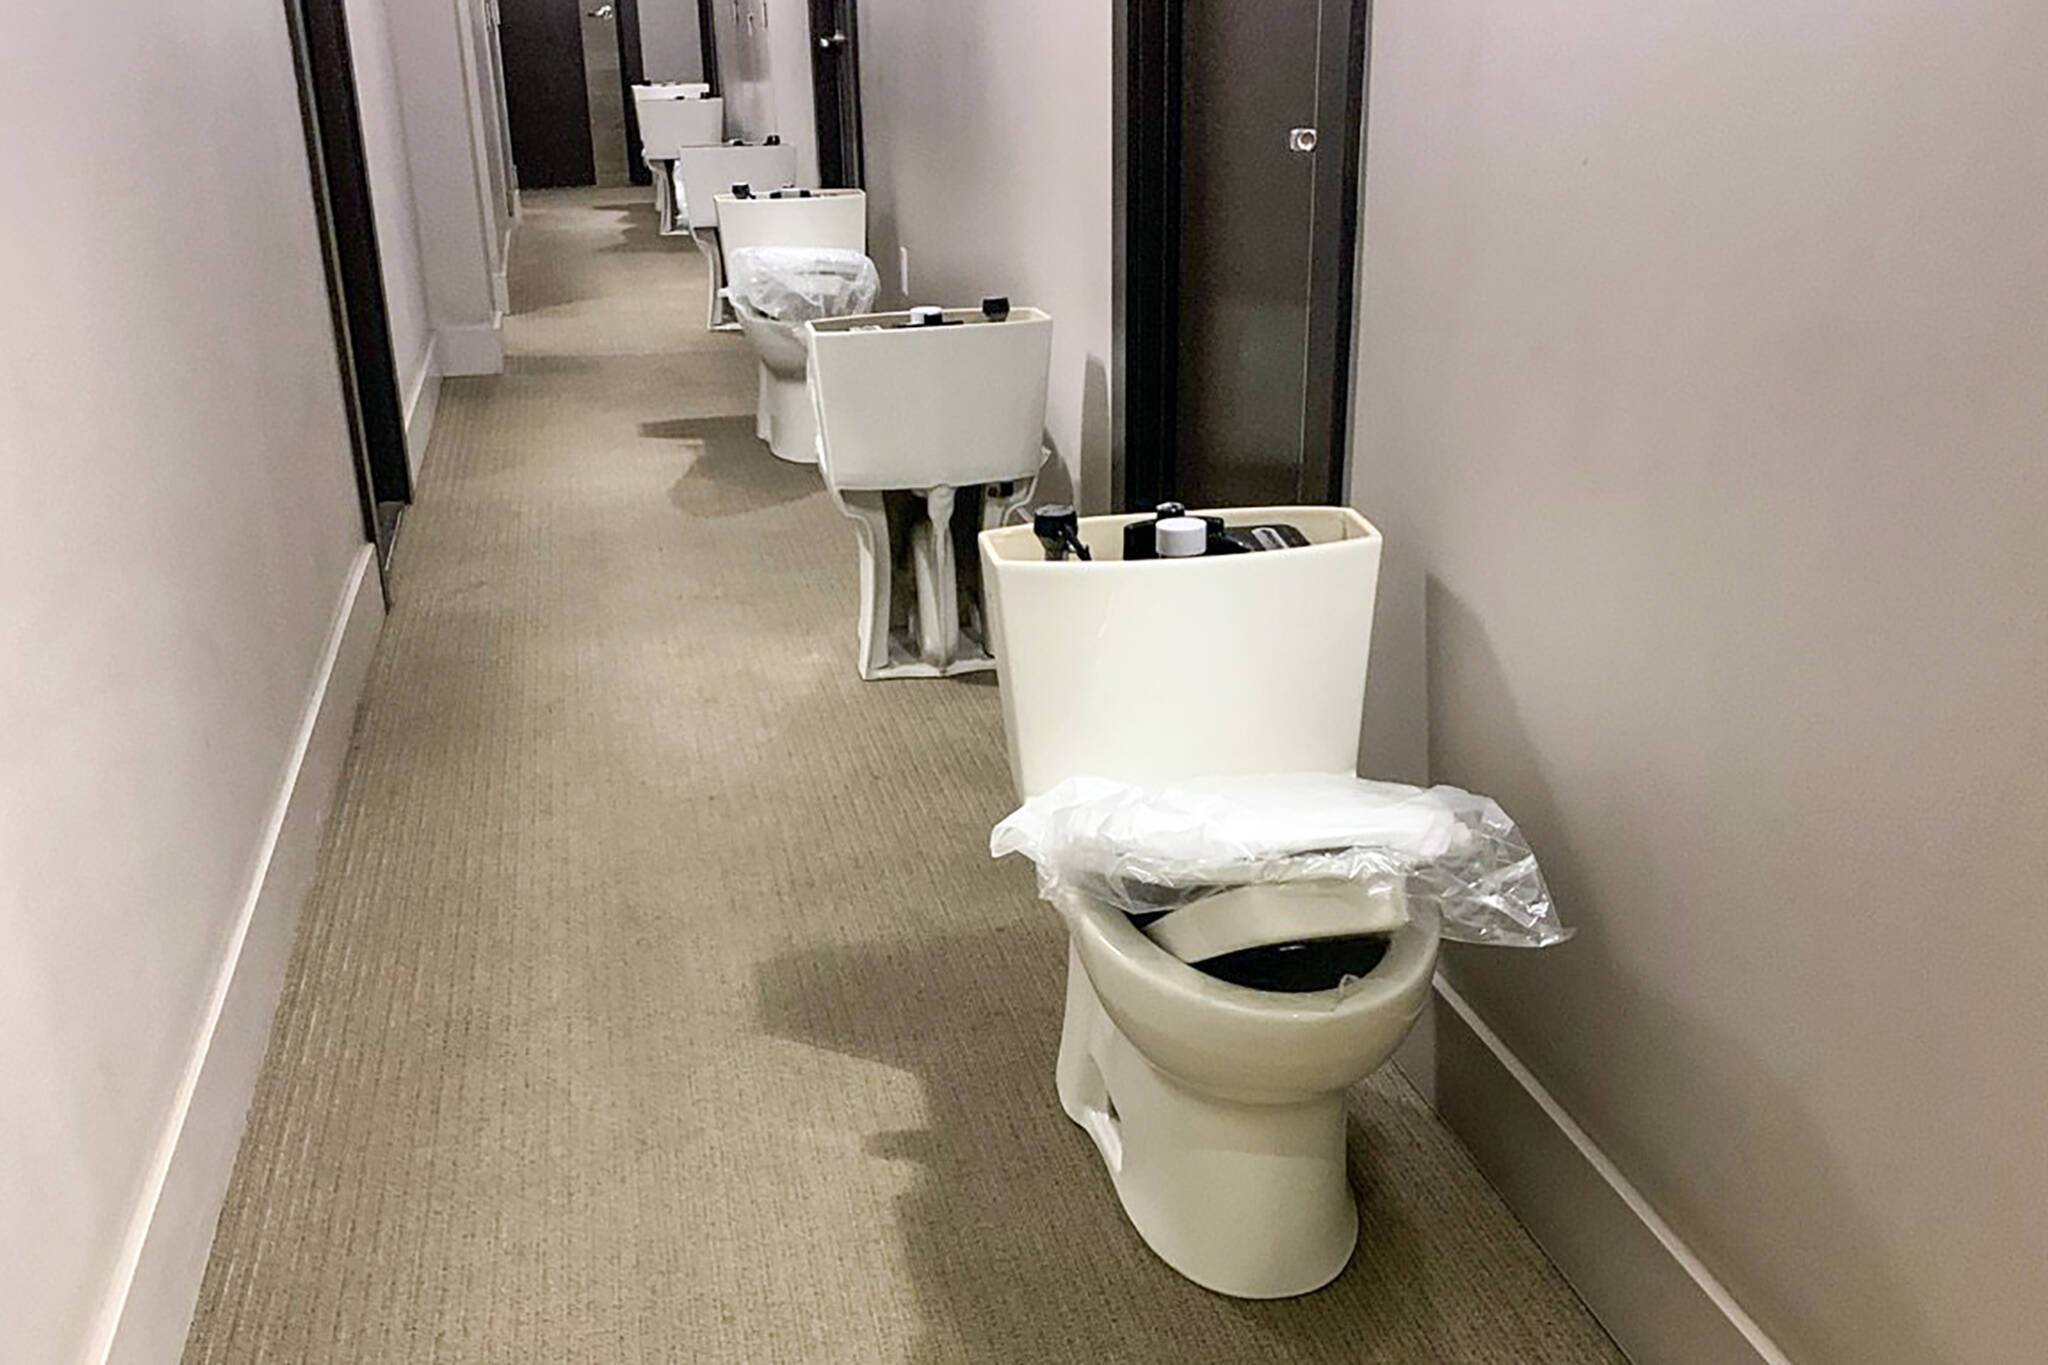 Cityplace toilets